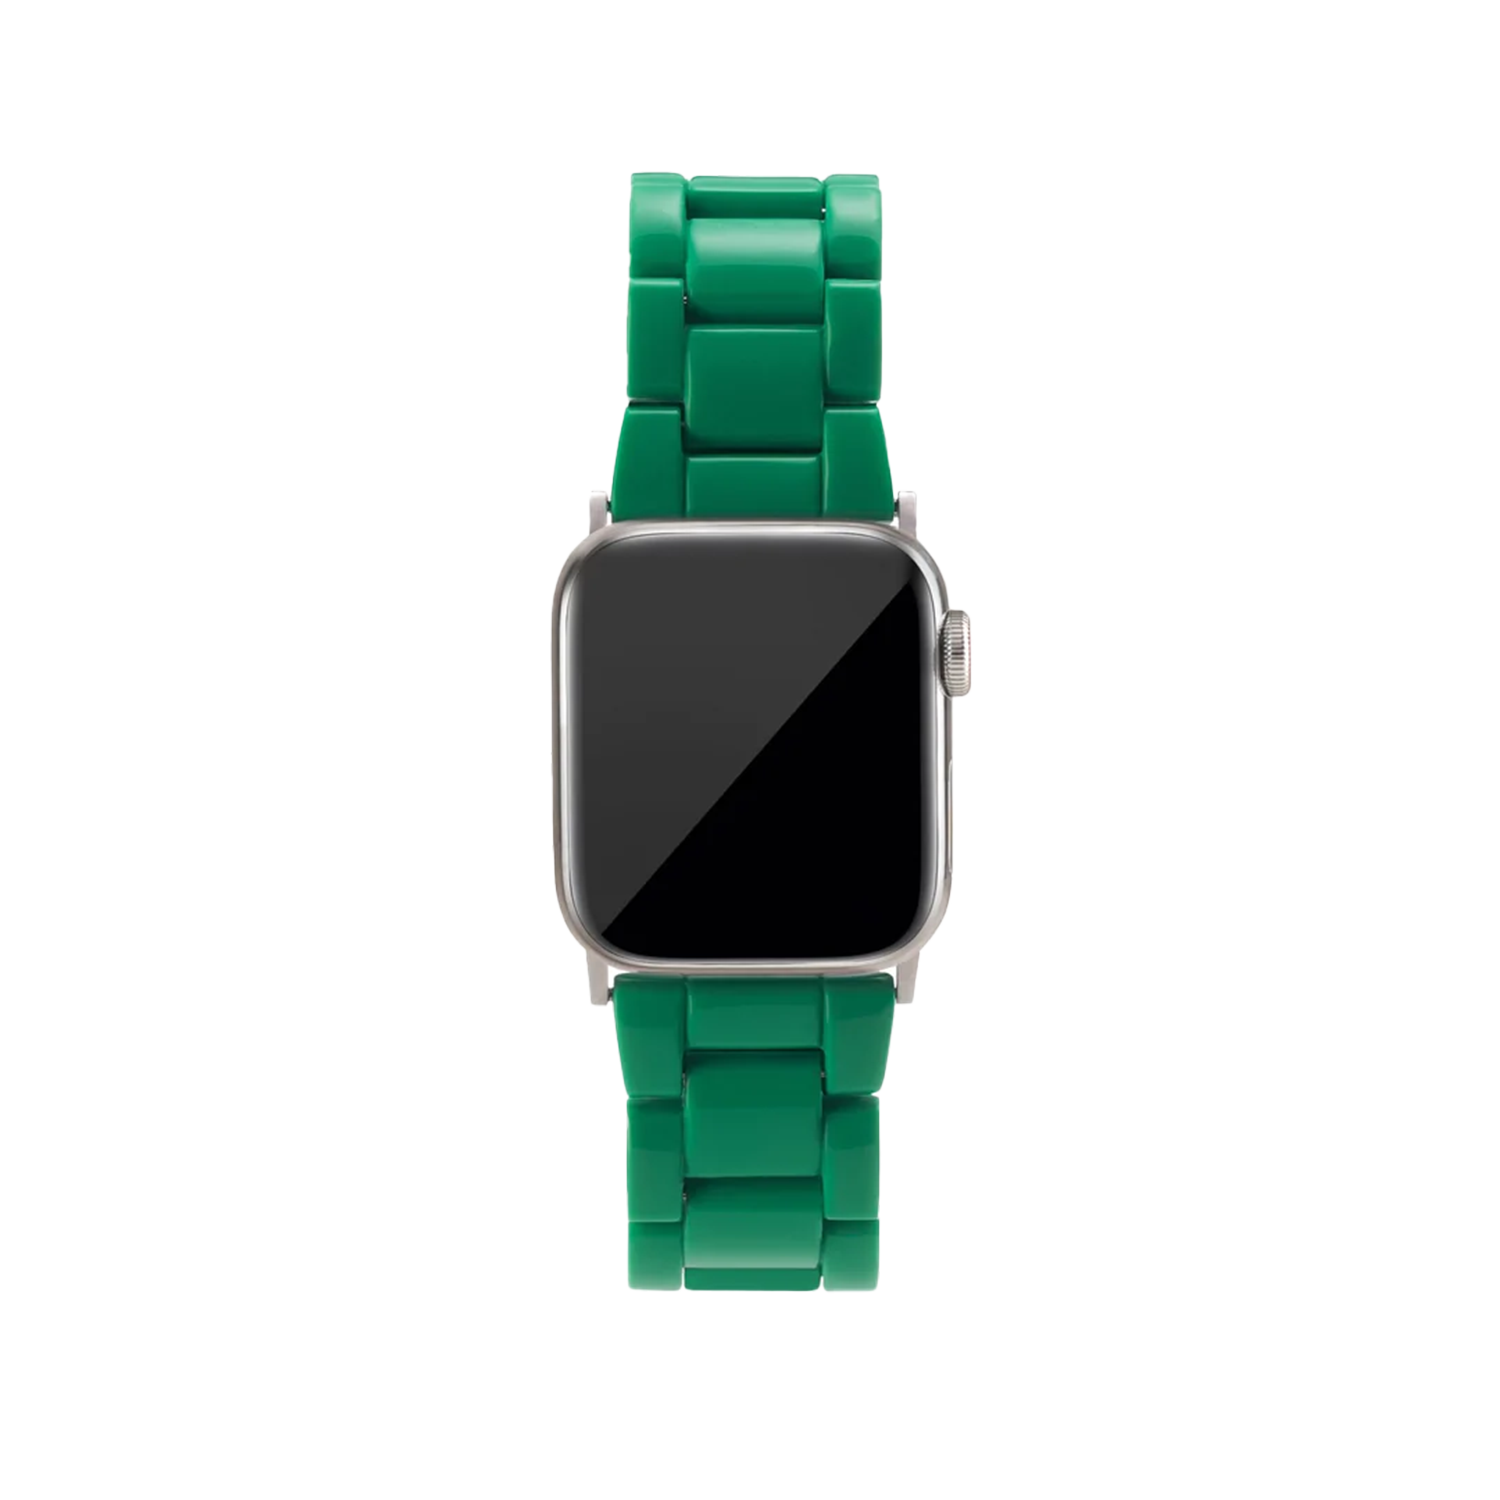 machete apple watch band in green